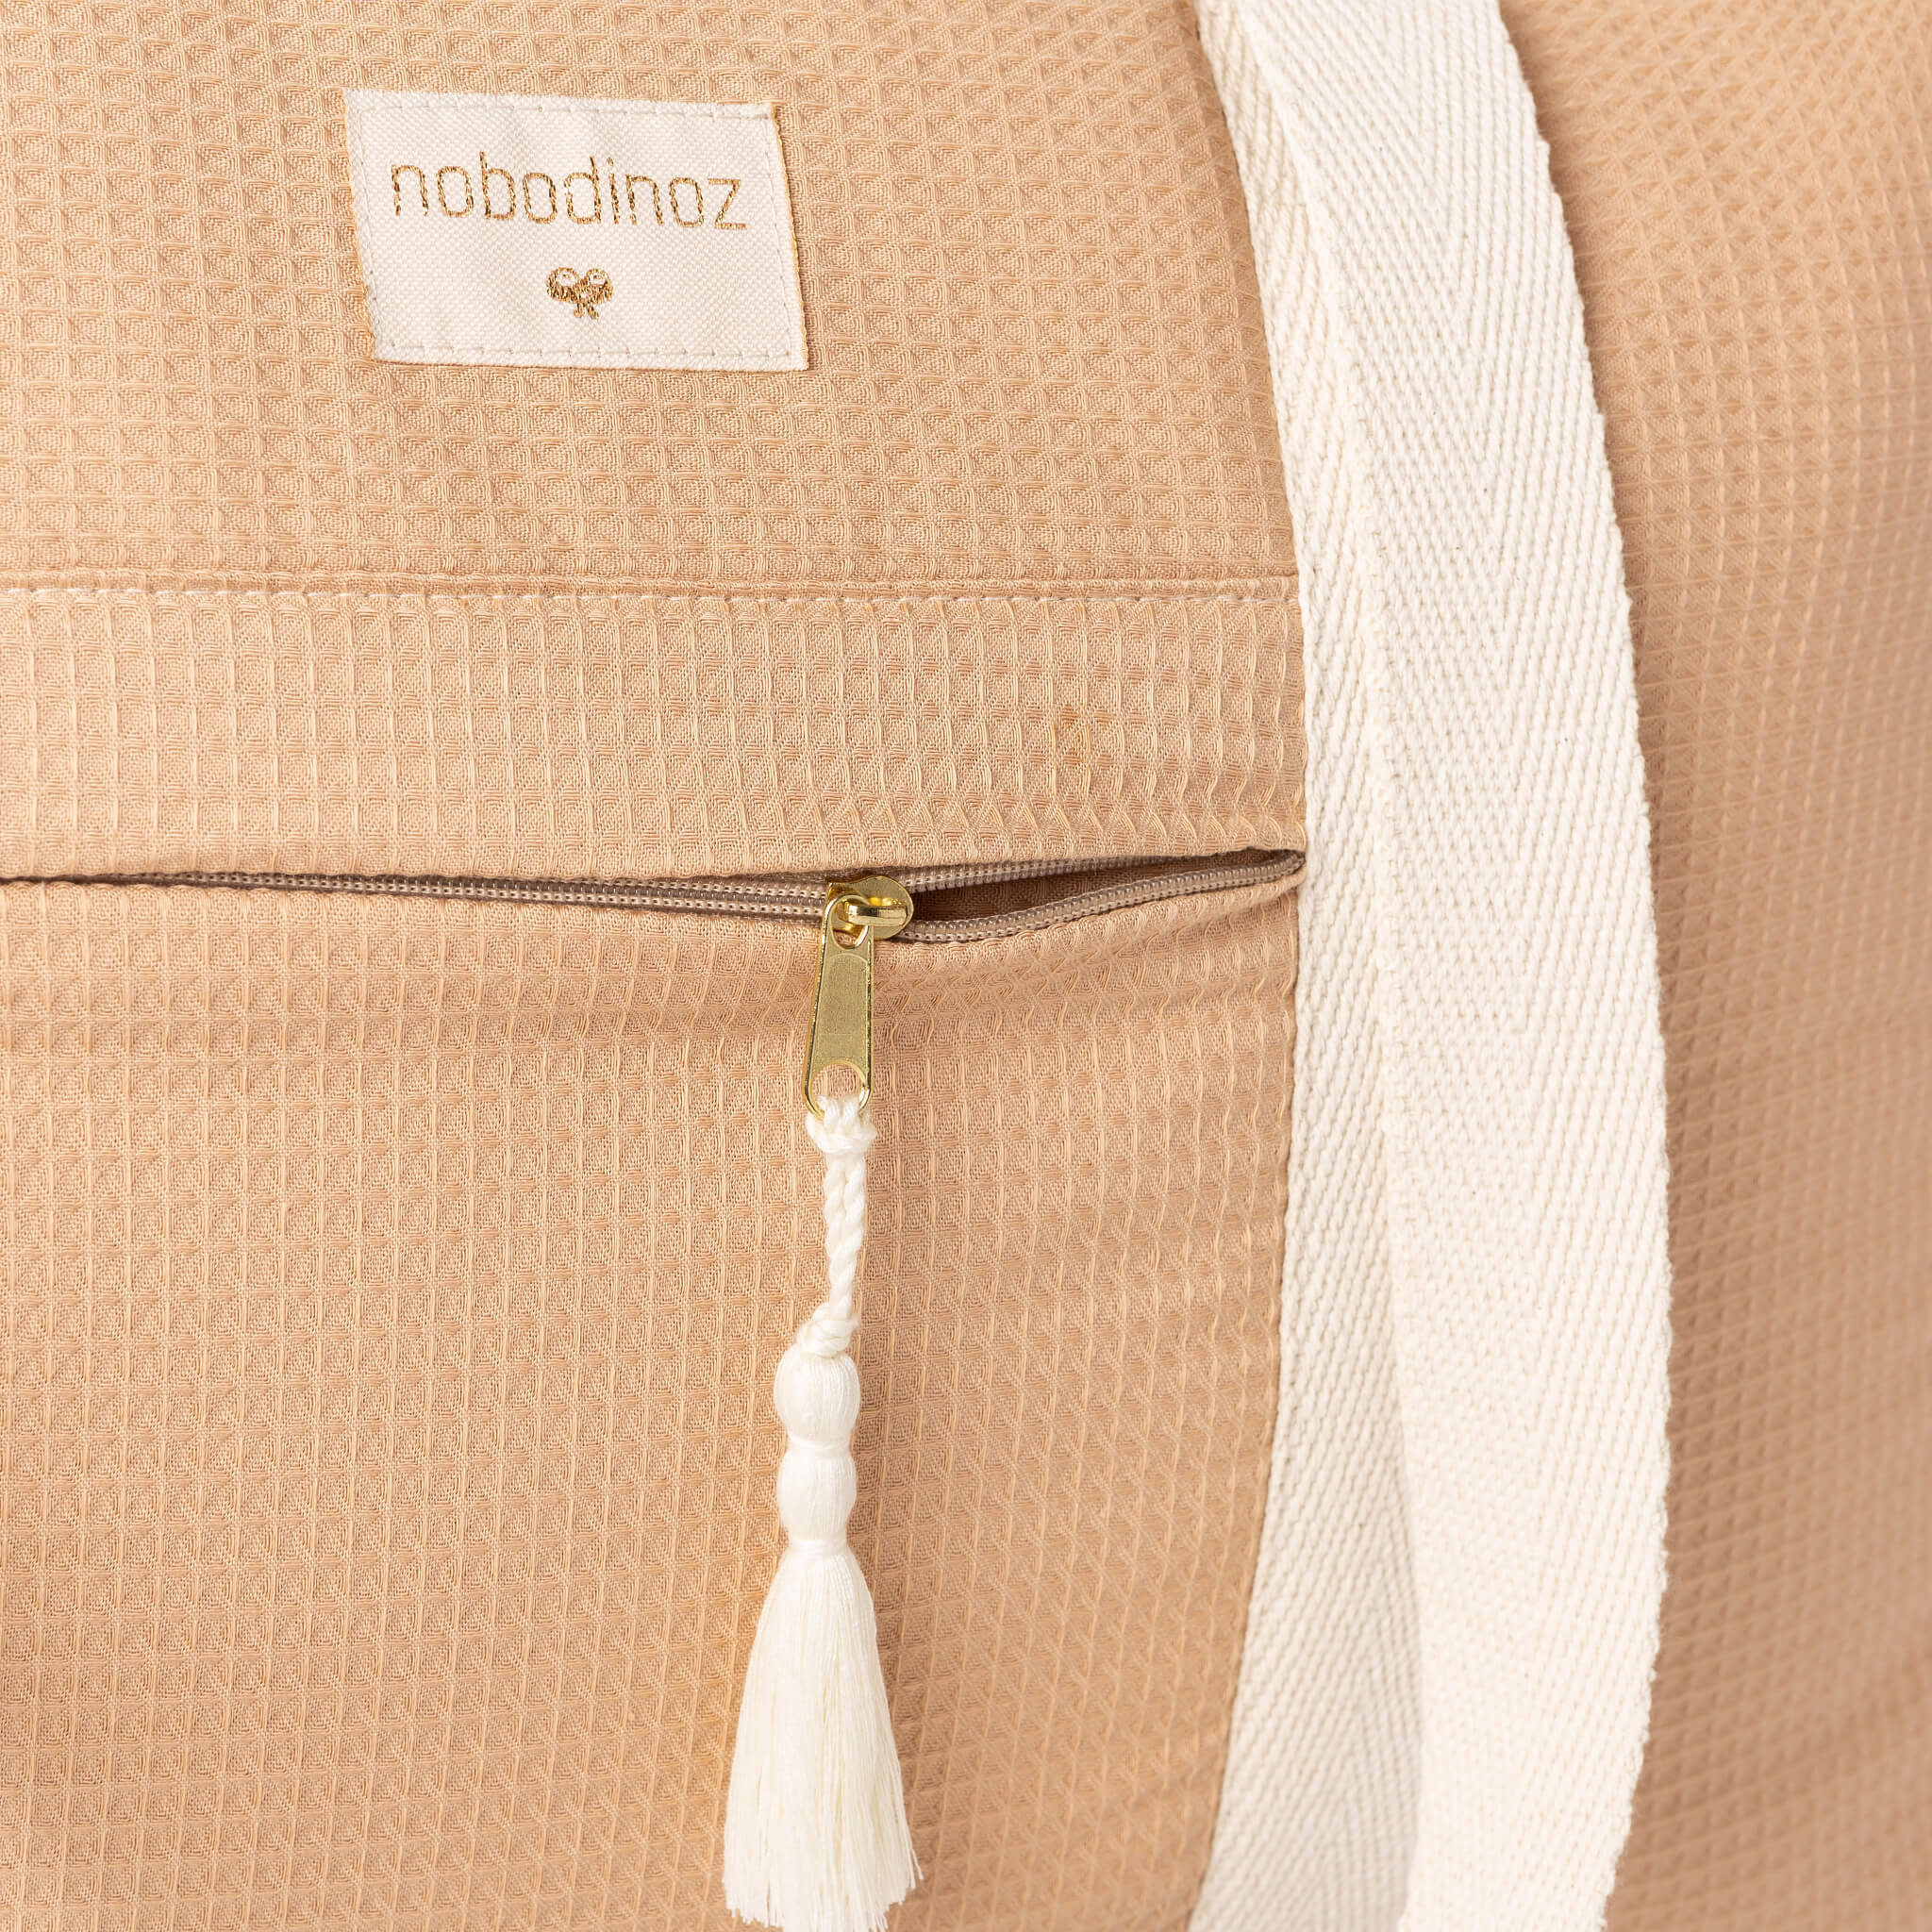 Nobodinoz Opera Maternity Bag in Nude Details